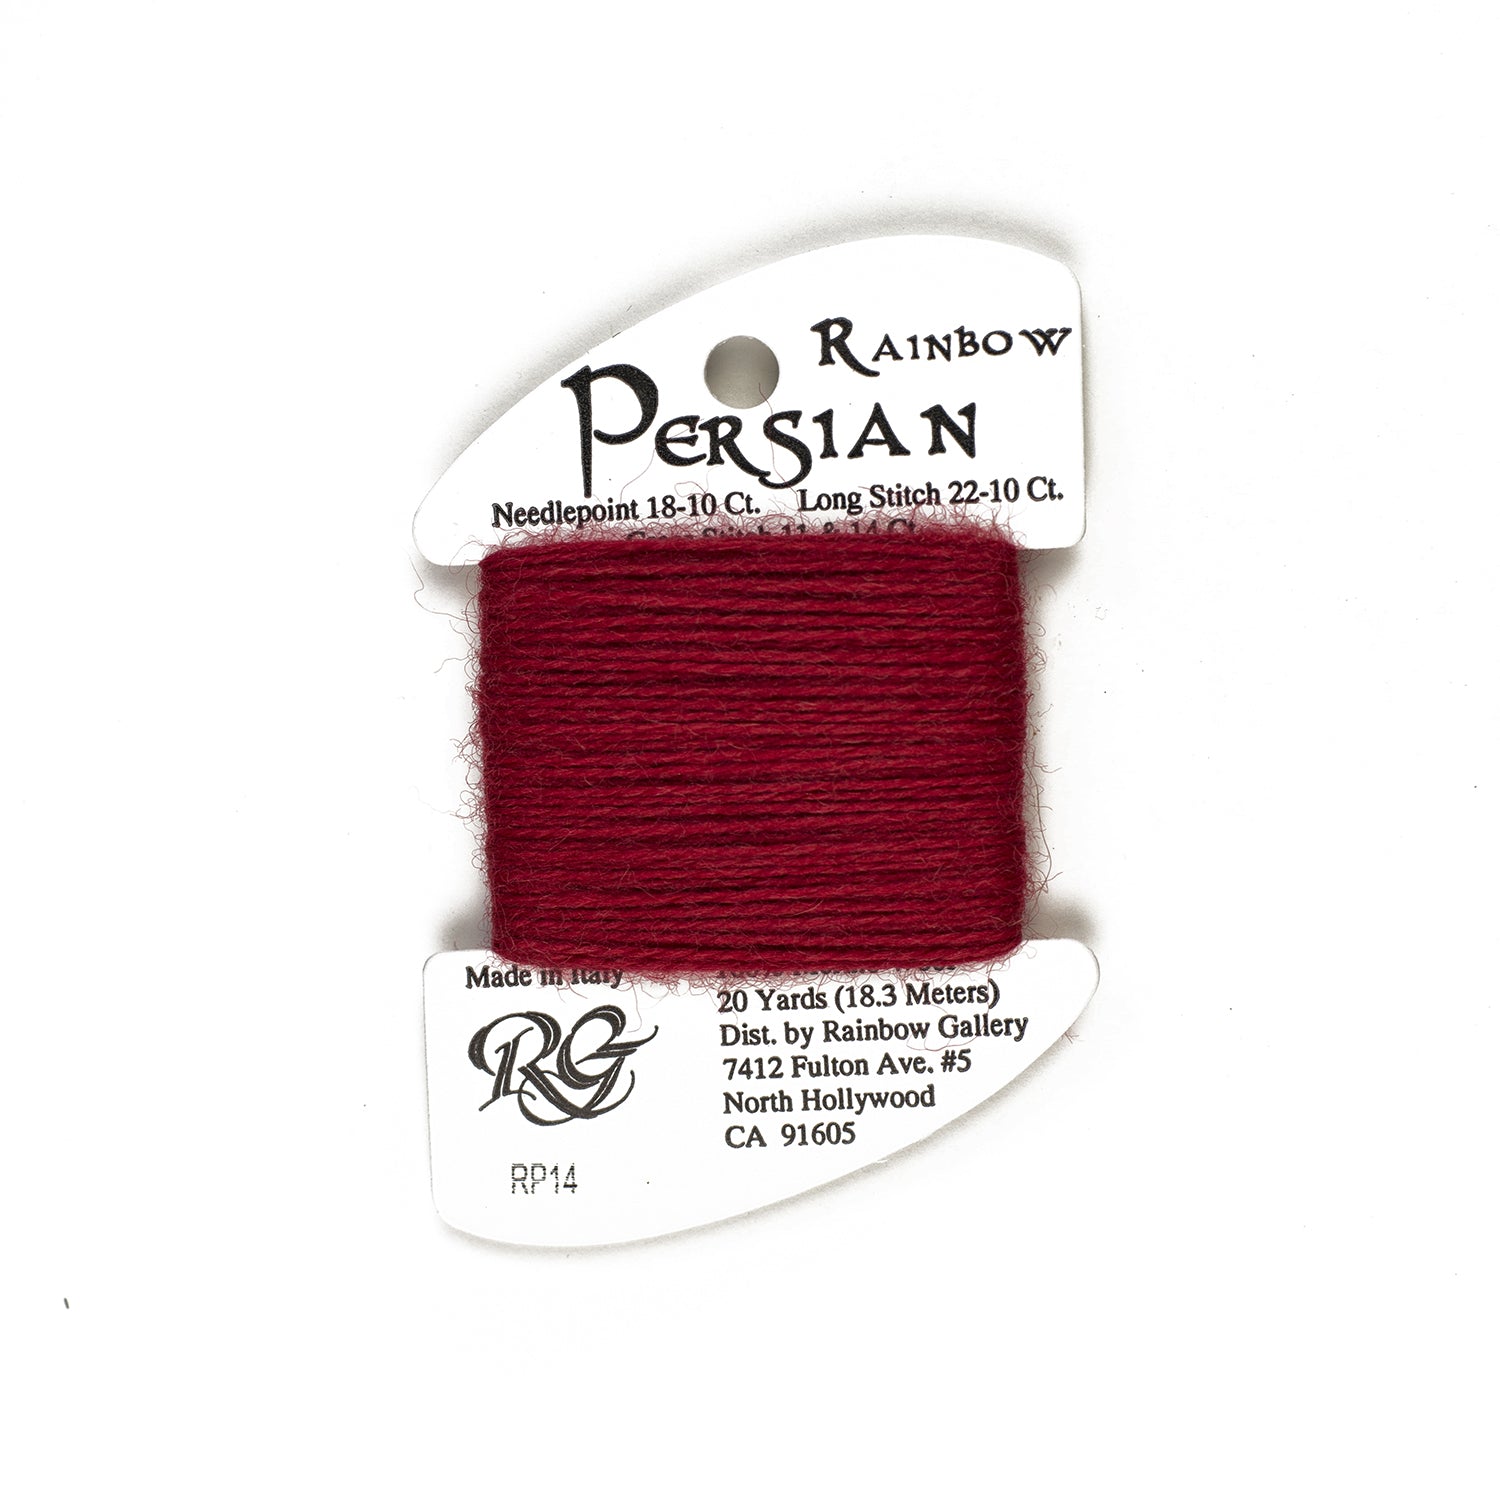 Rainbow Persian 100% Wool 01-80